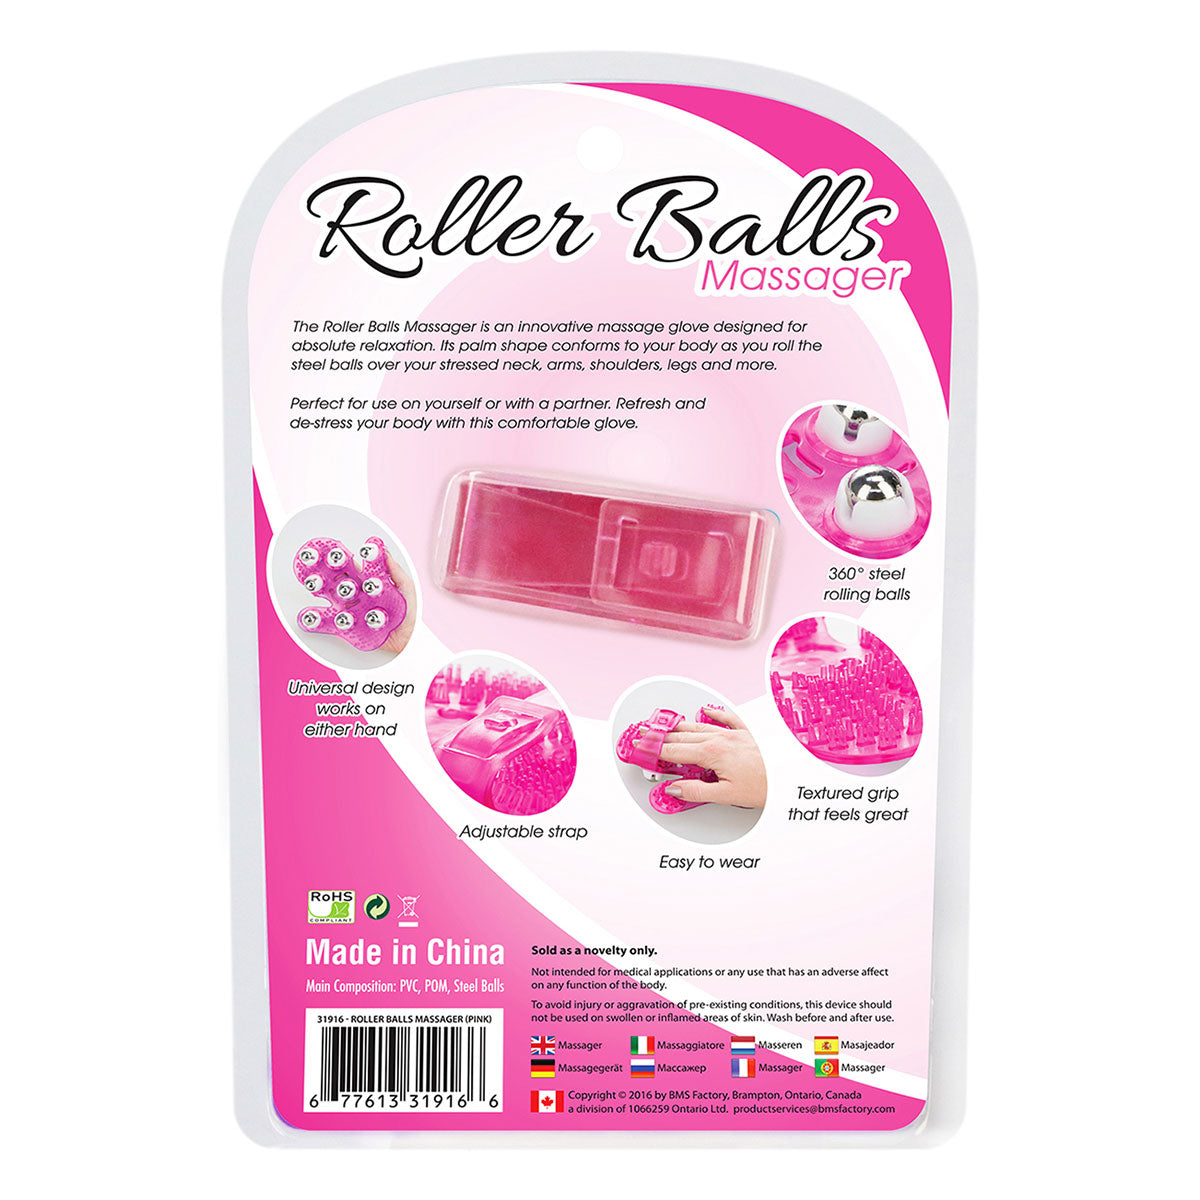 Simple & True Roller Balls Massager - Assorted Colors